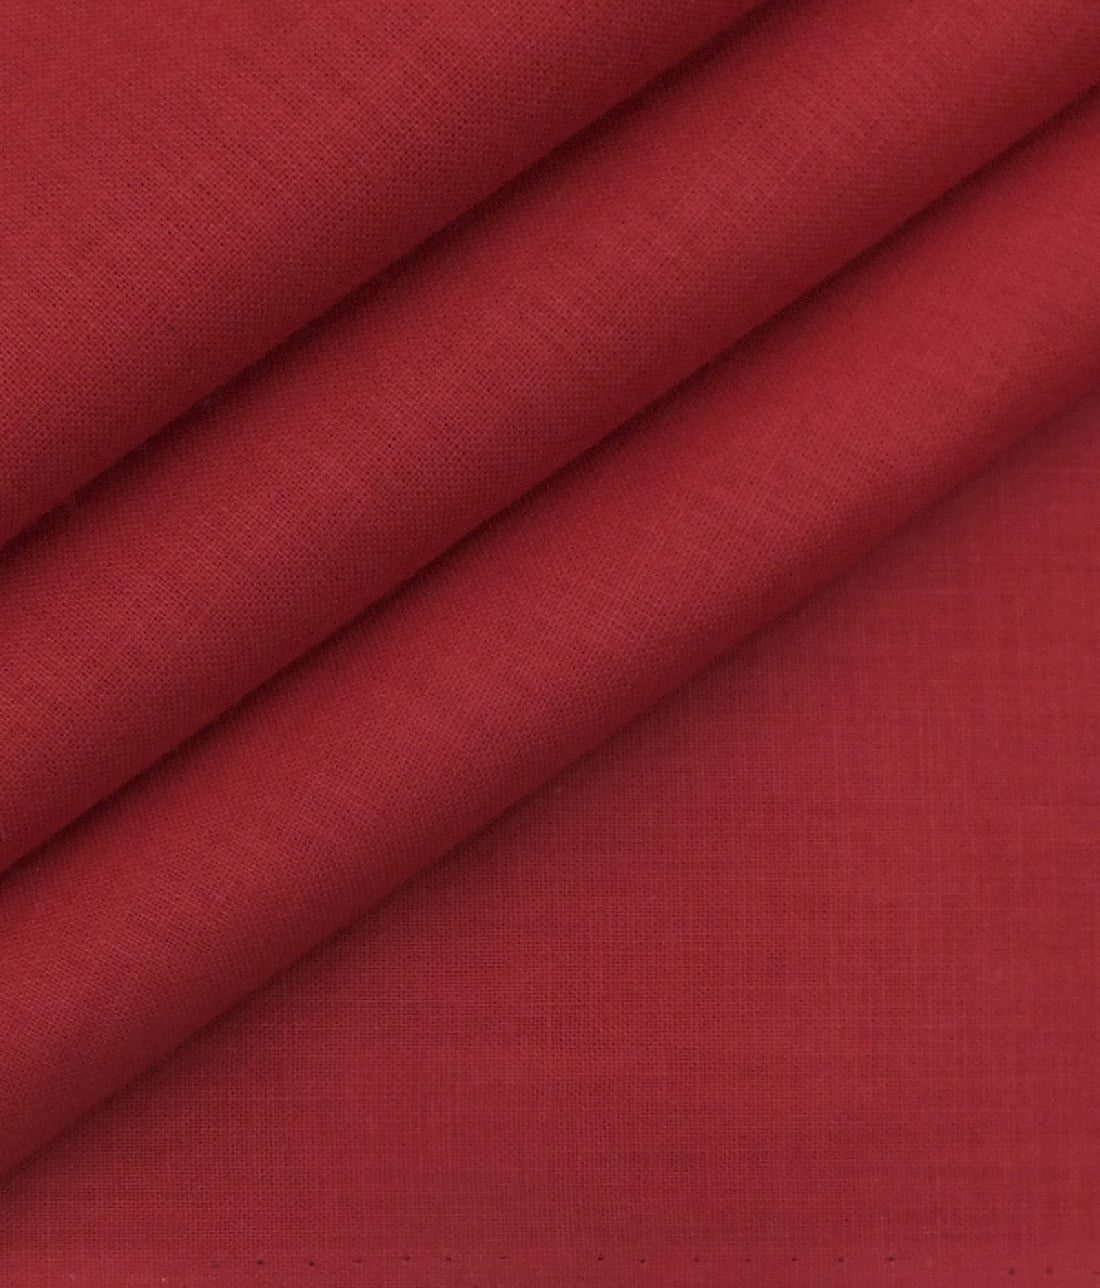 Mainstays 100% Cotton 1 Yard Precut Fabric Solid Red